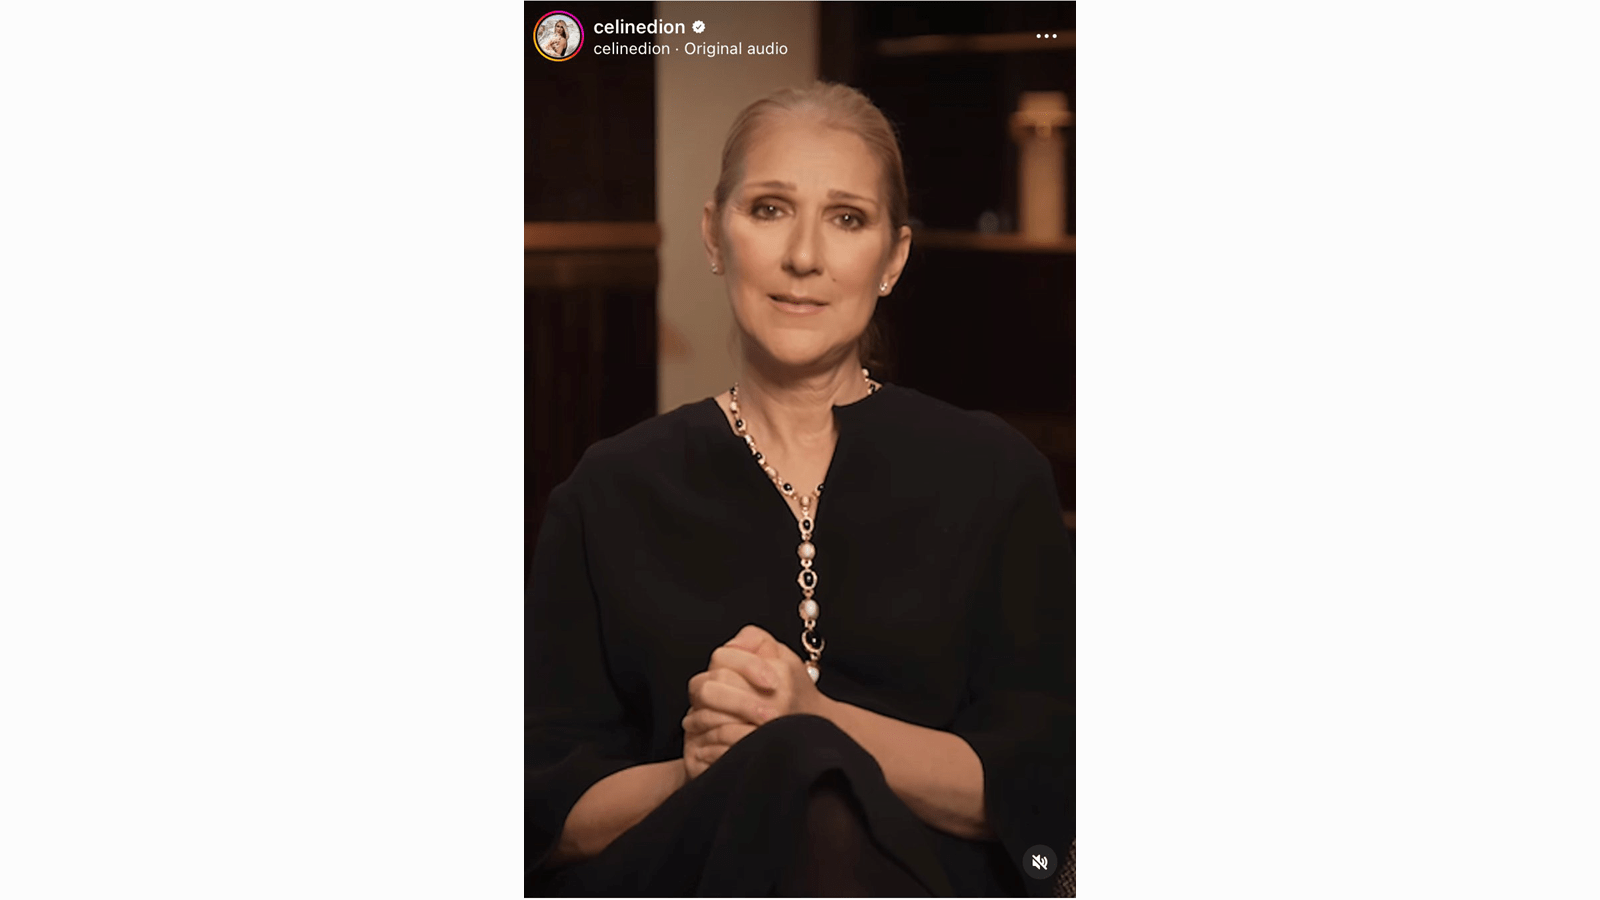 Singer Celine Dion speaking to fans via a recorded video on Instagram